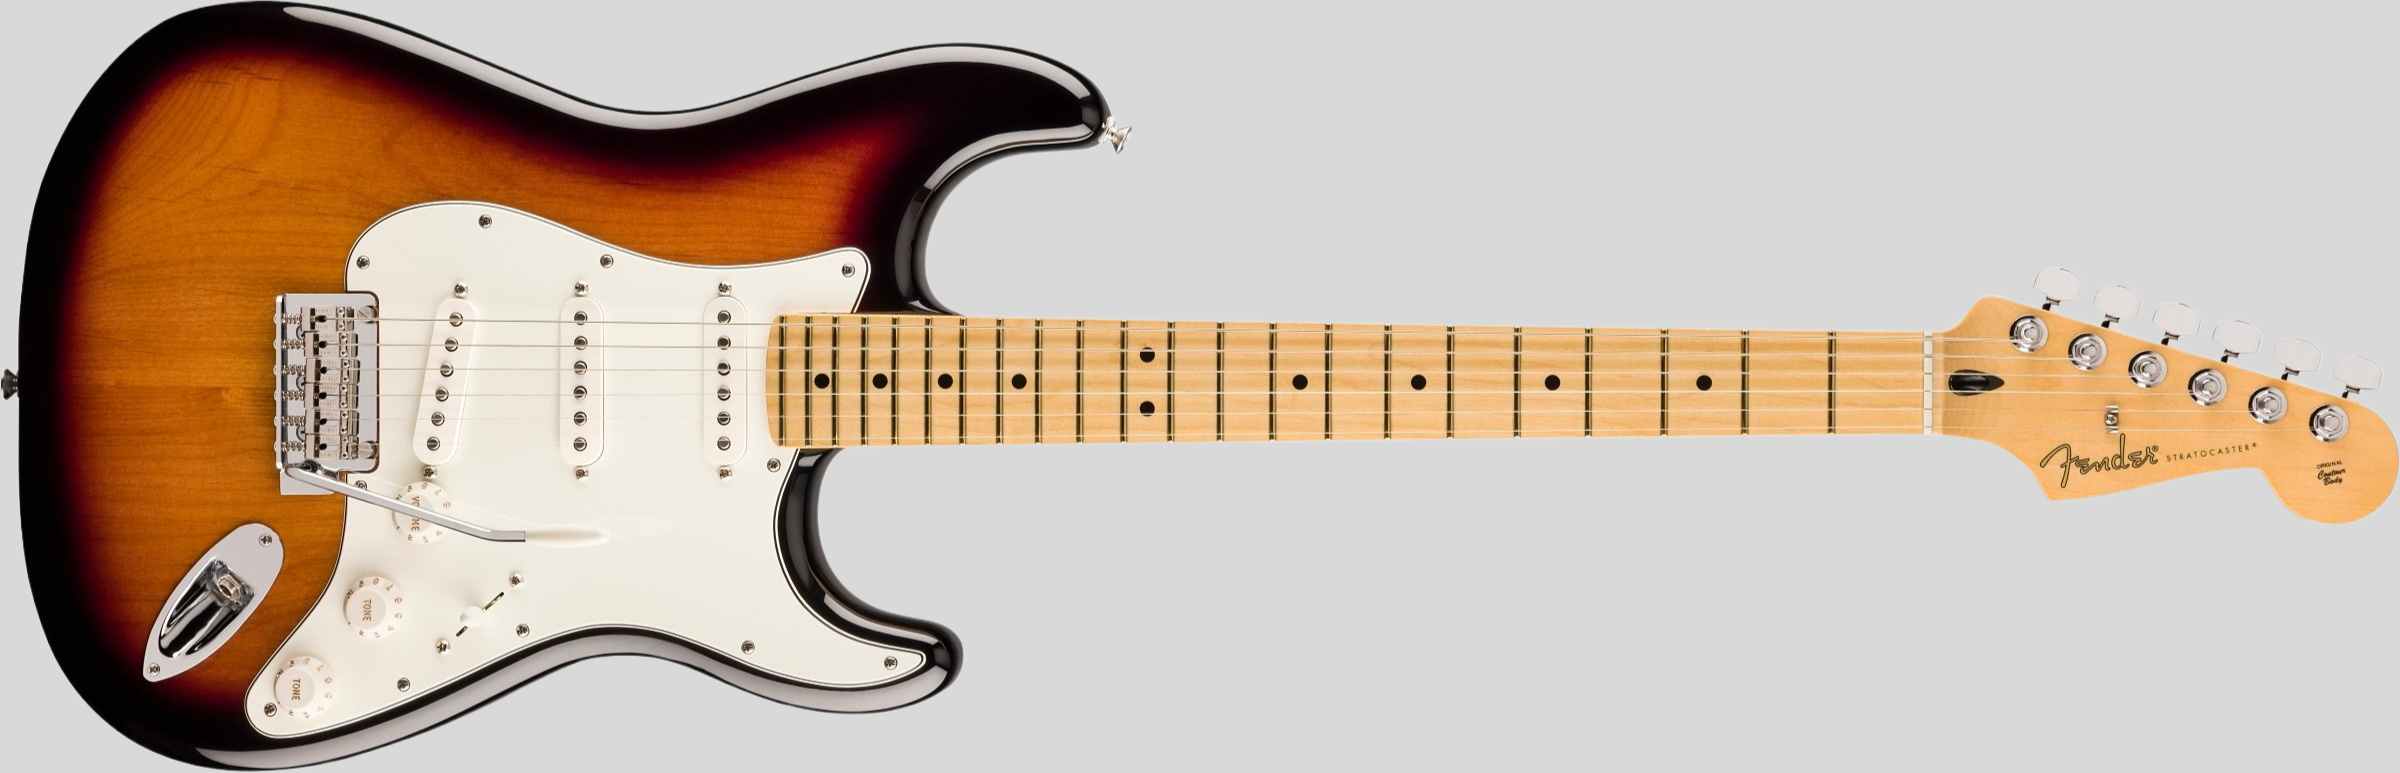 Fender Stratocaster NITH